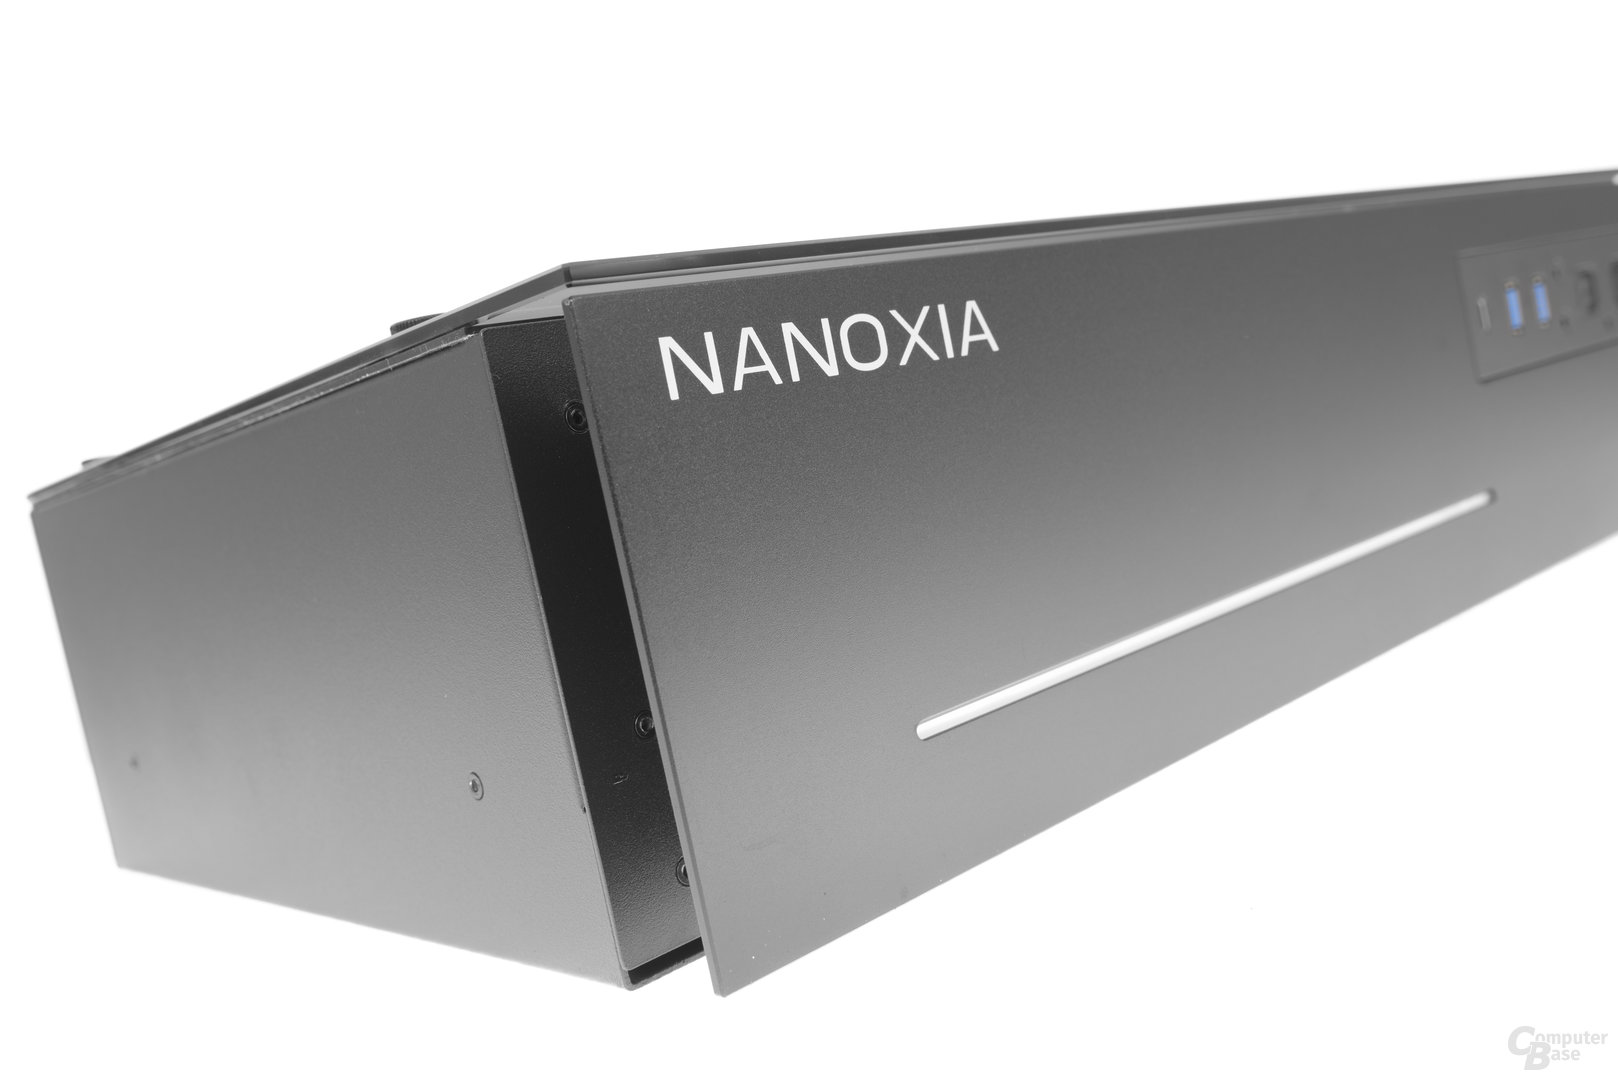 Nanoxia Project S Mini – LED-Leuchtstreifen an der Front